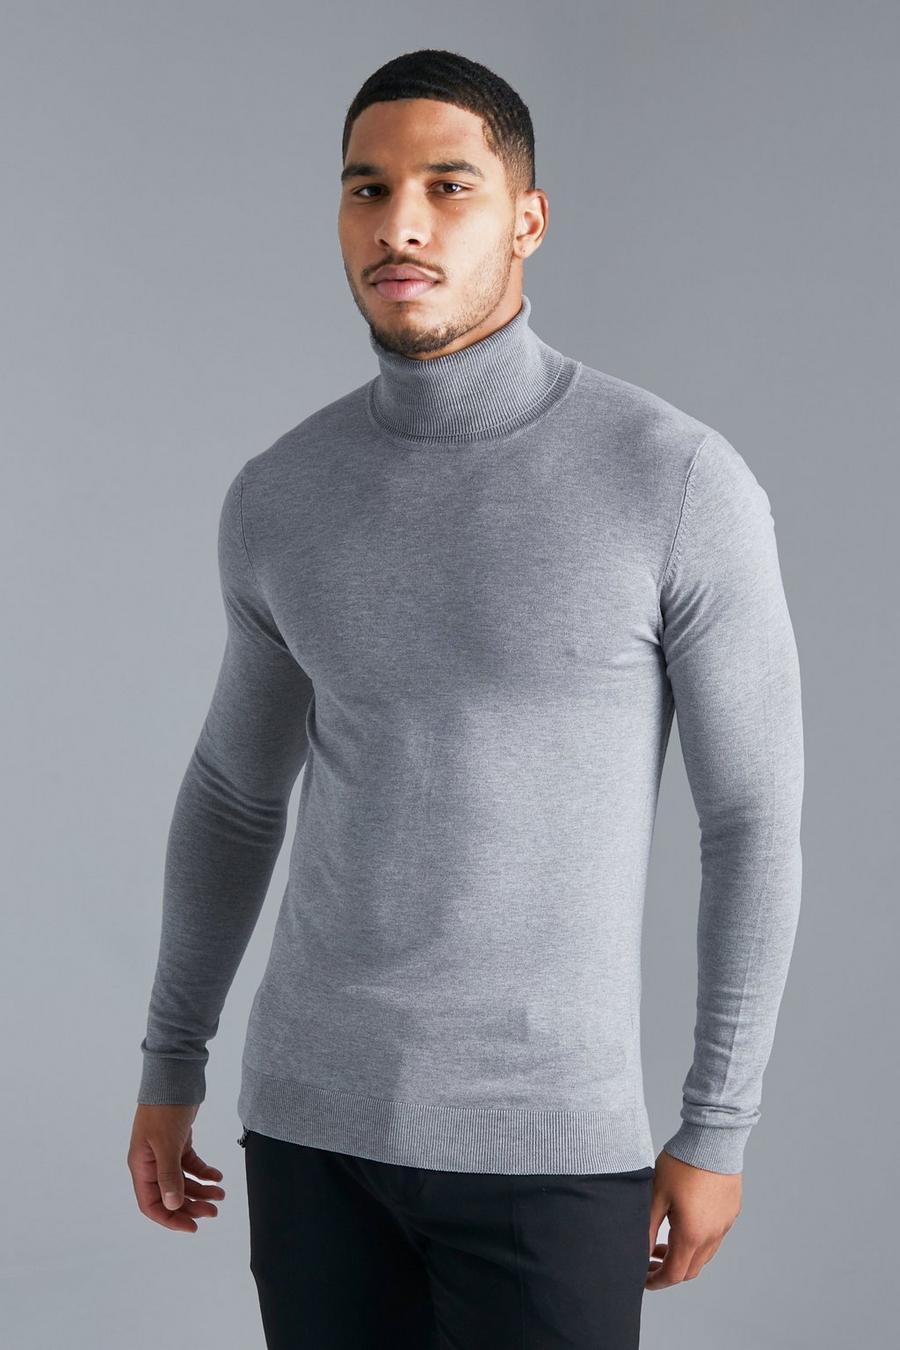 Grey marl סוודר בגזרה רגילה מבד ממוחזר עם צווארון נגלל, לגברים גבוהים